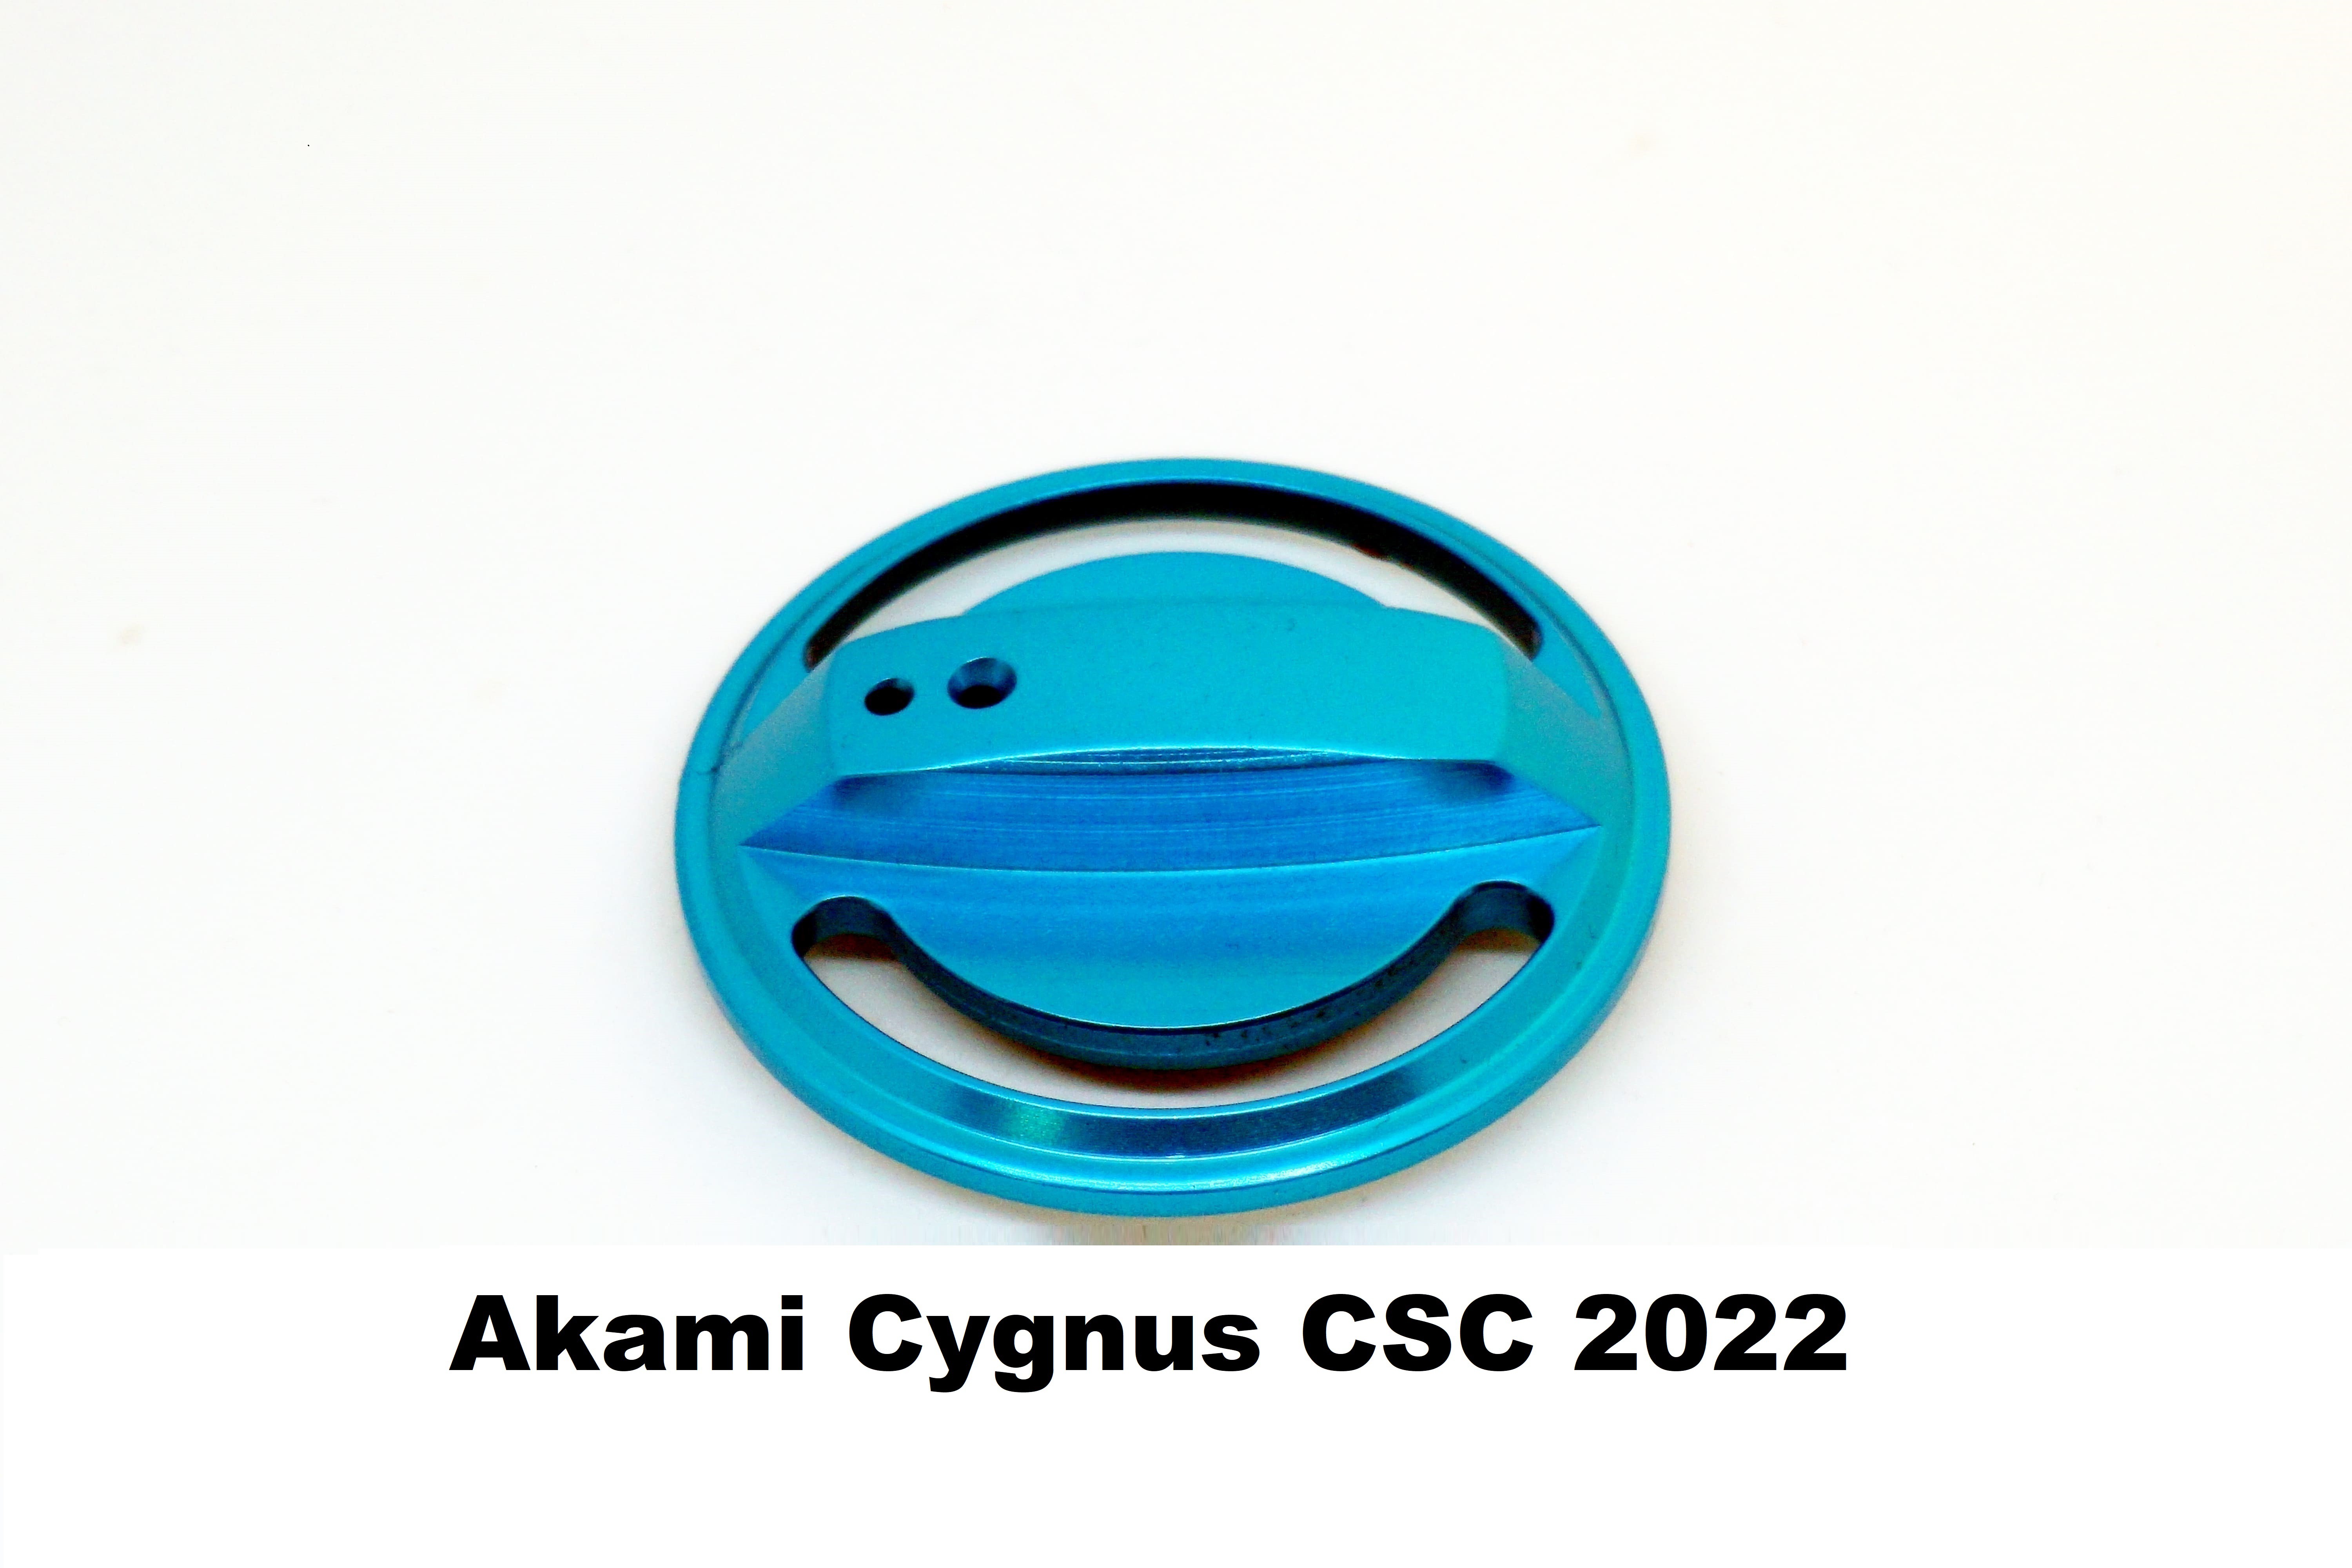 Tapón de Freno Akami Cygnus CSC 2022